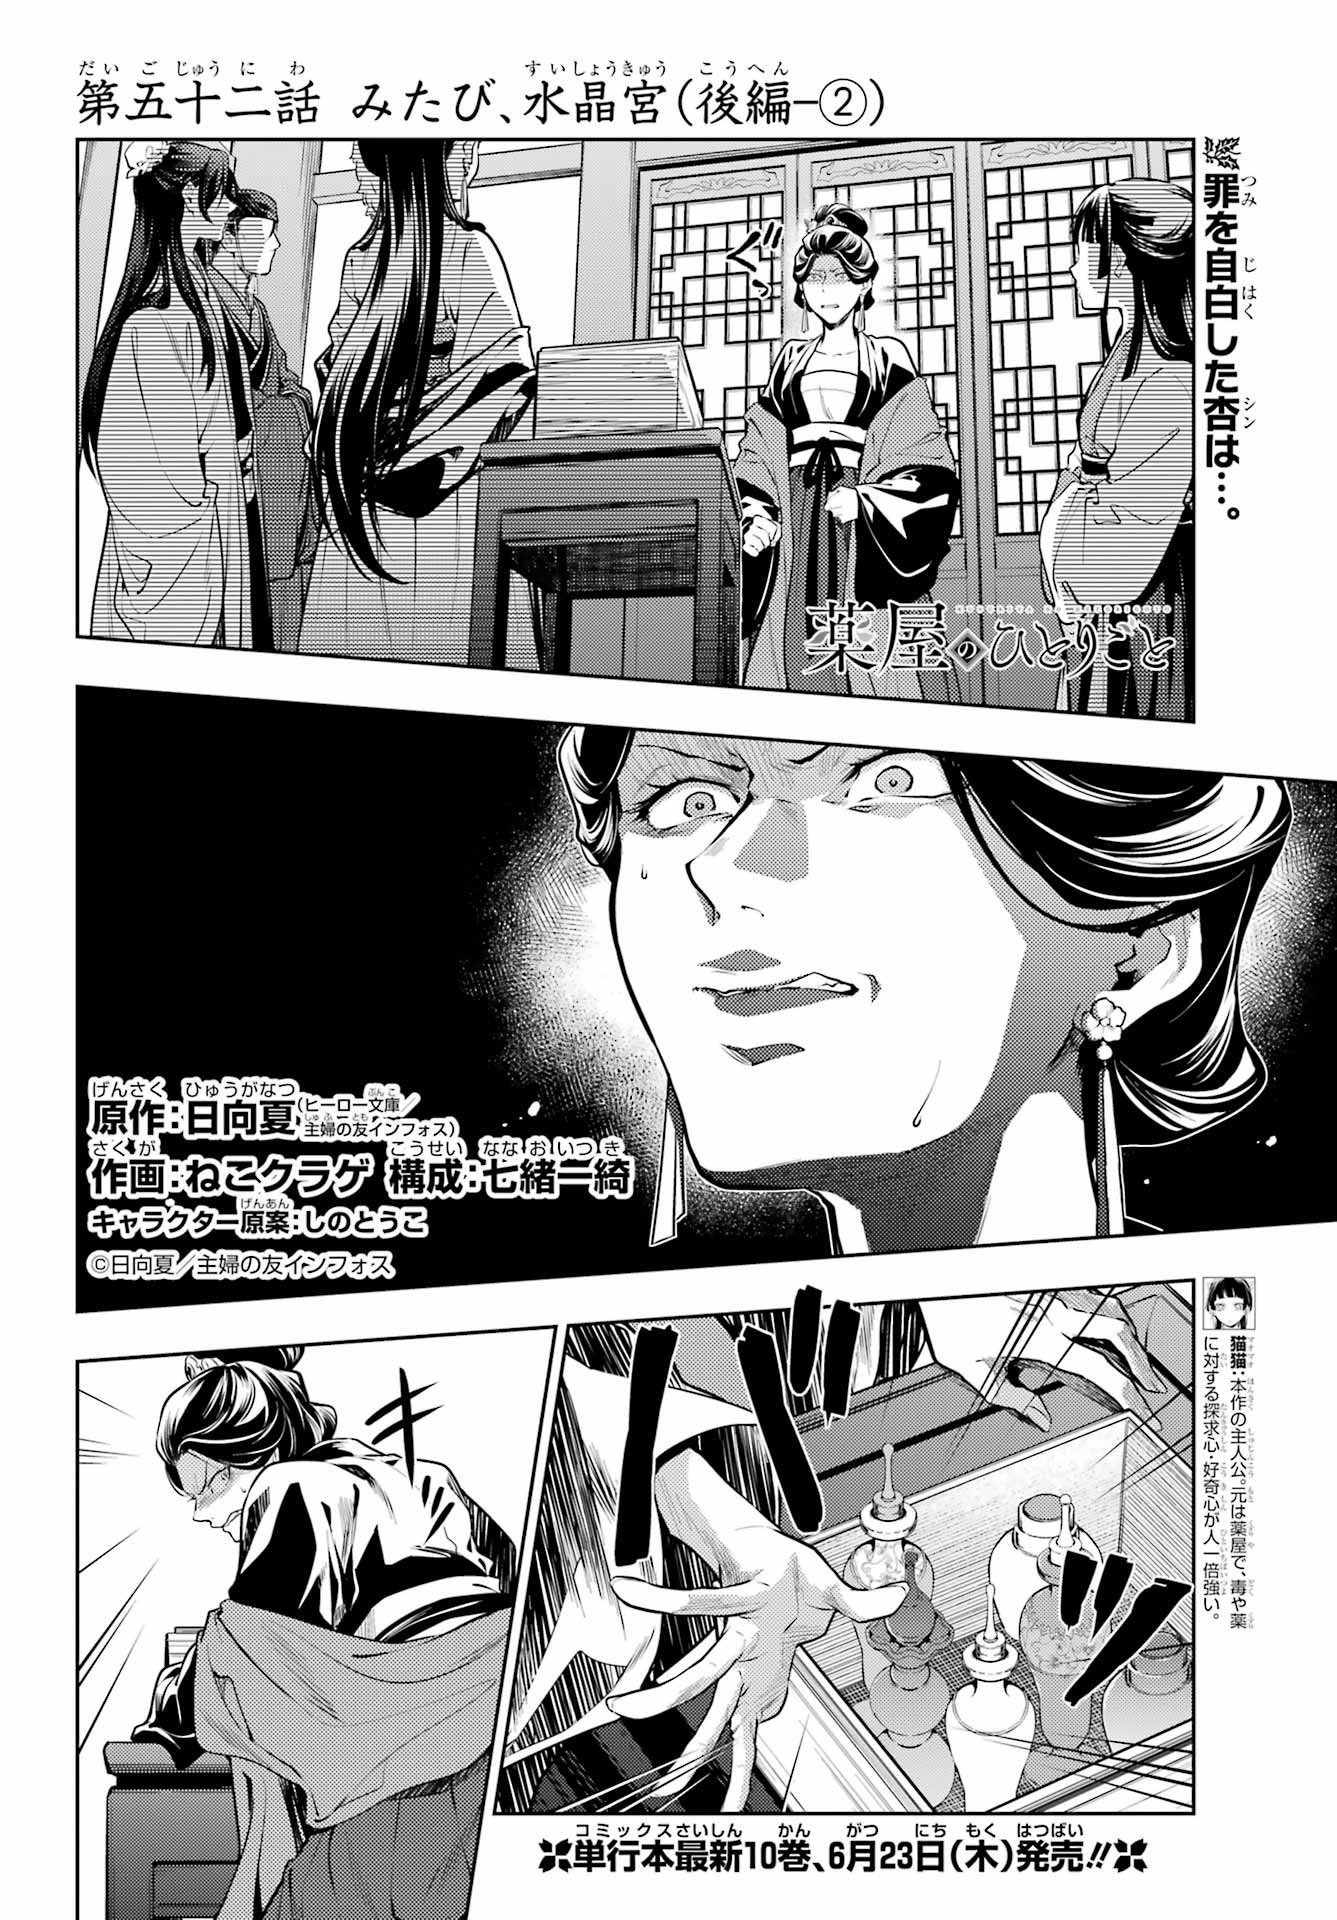 Kusuriya no Hitorigoto - Chapter 52-2 - Page 1